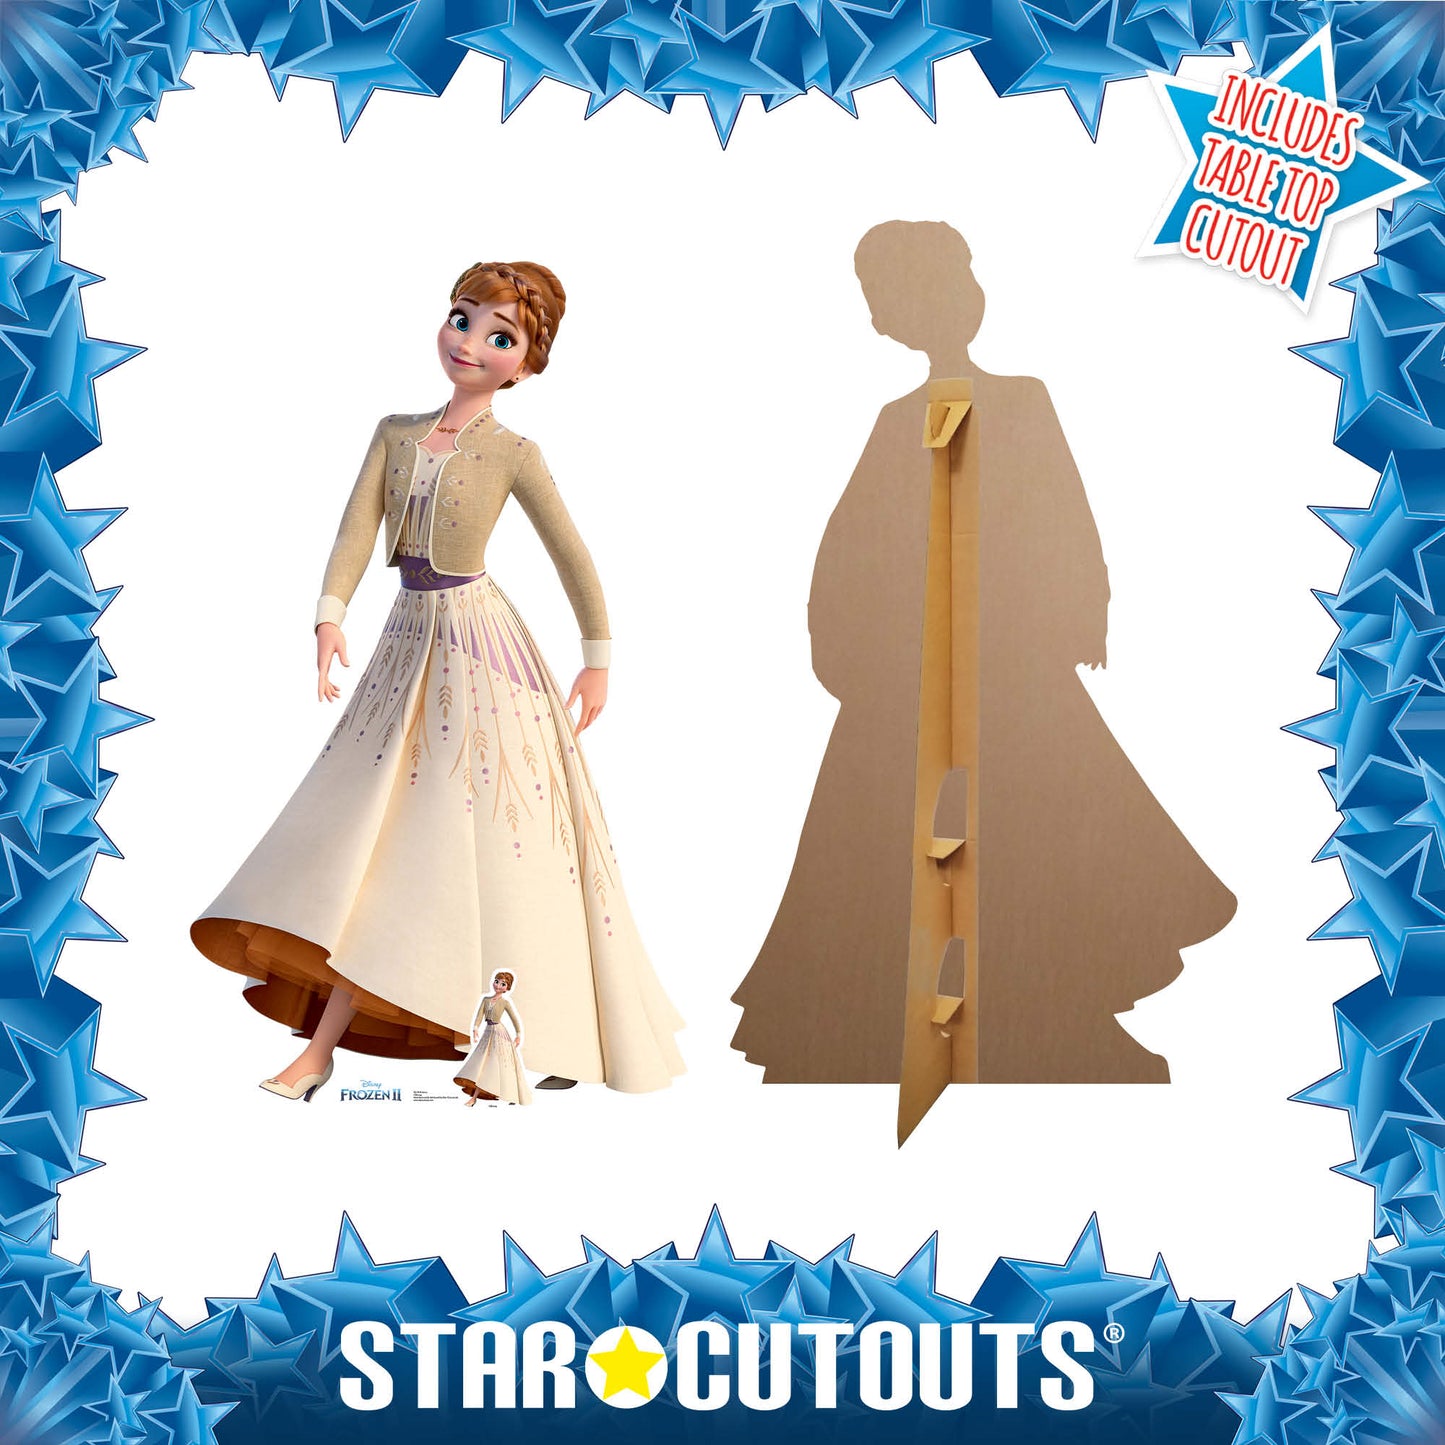 SC1418 Anna Cream Dress Cardboard Cut Out Height 164cm